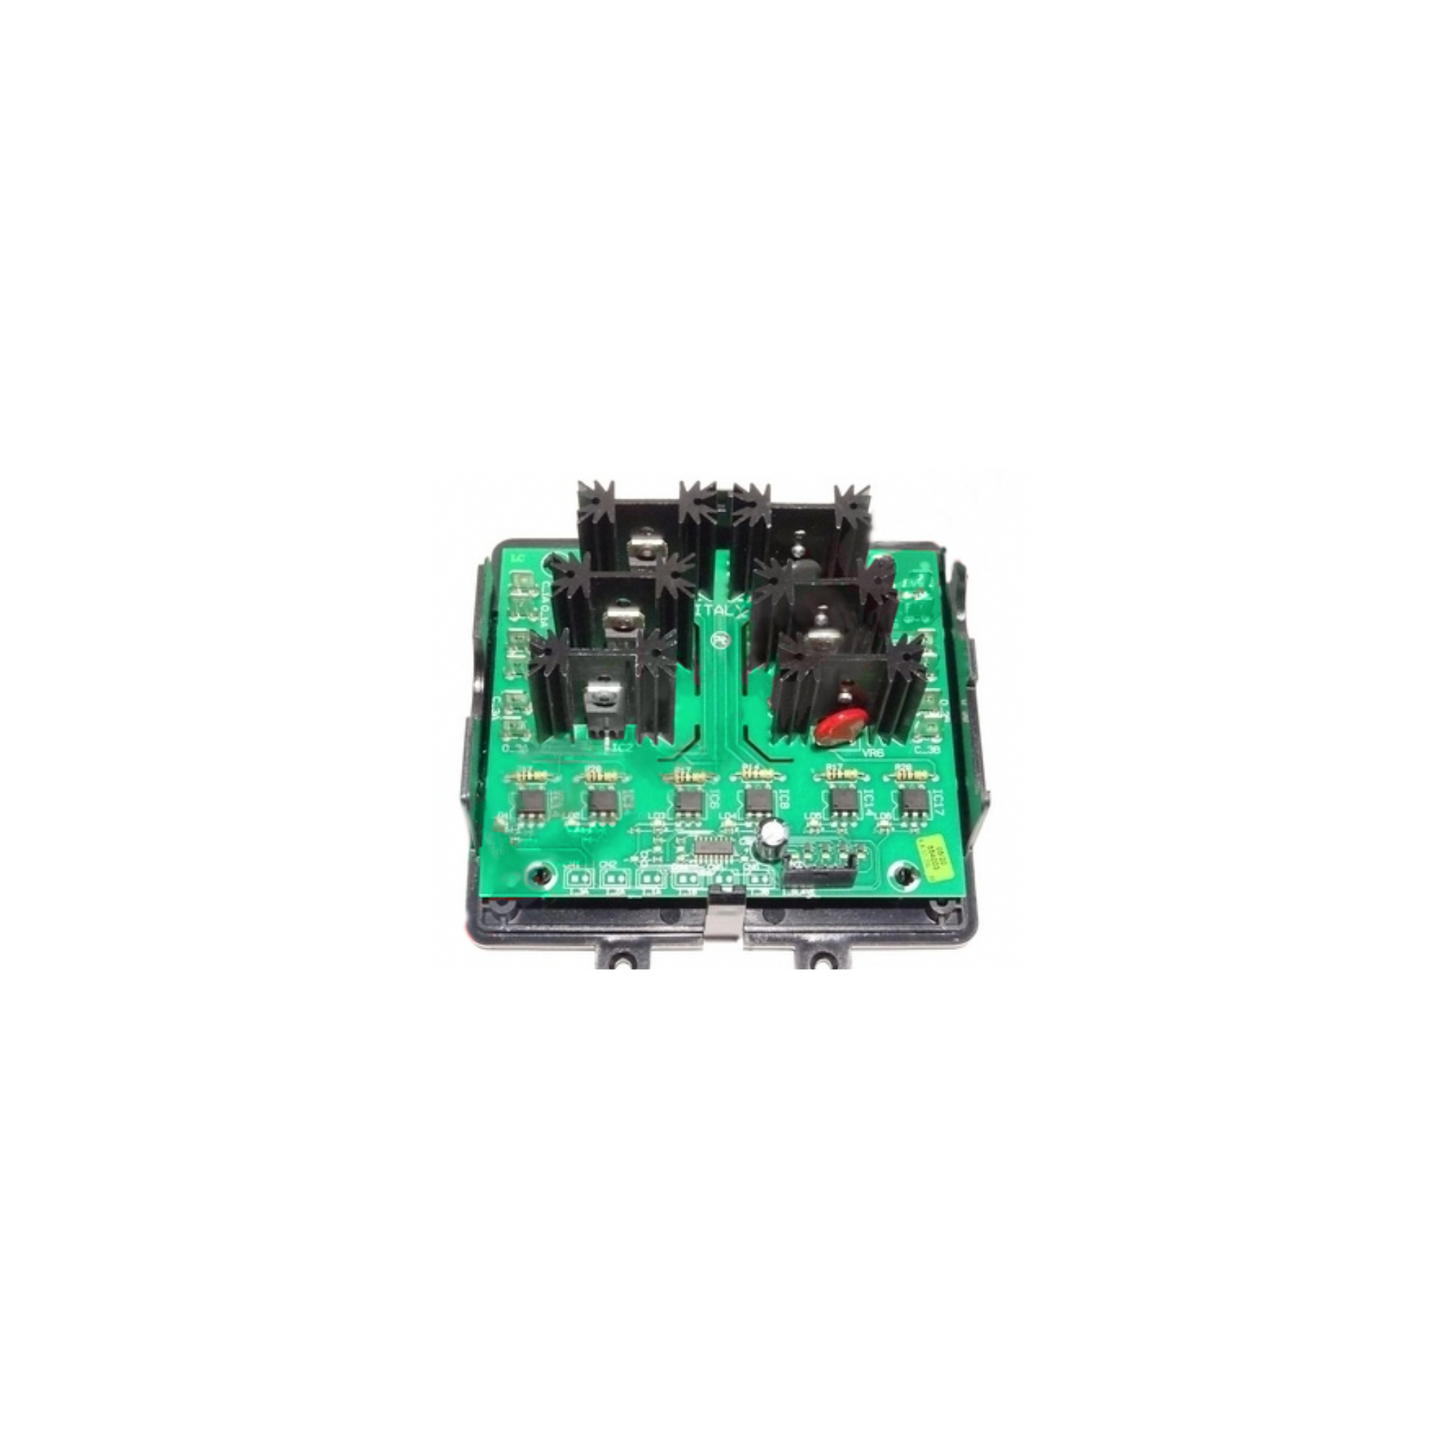 Barista T Power Control PCB (I.3603)